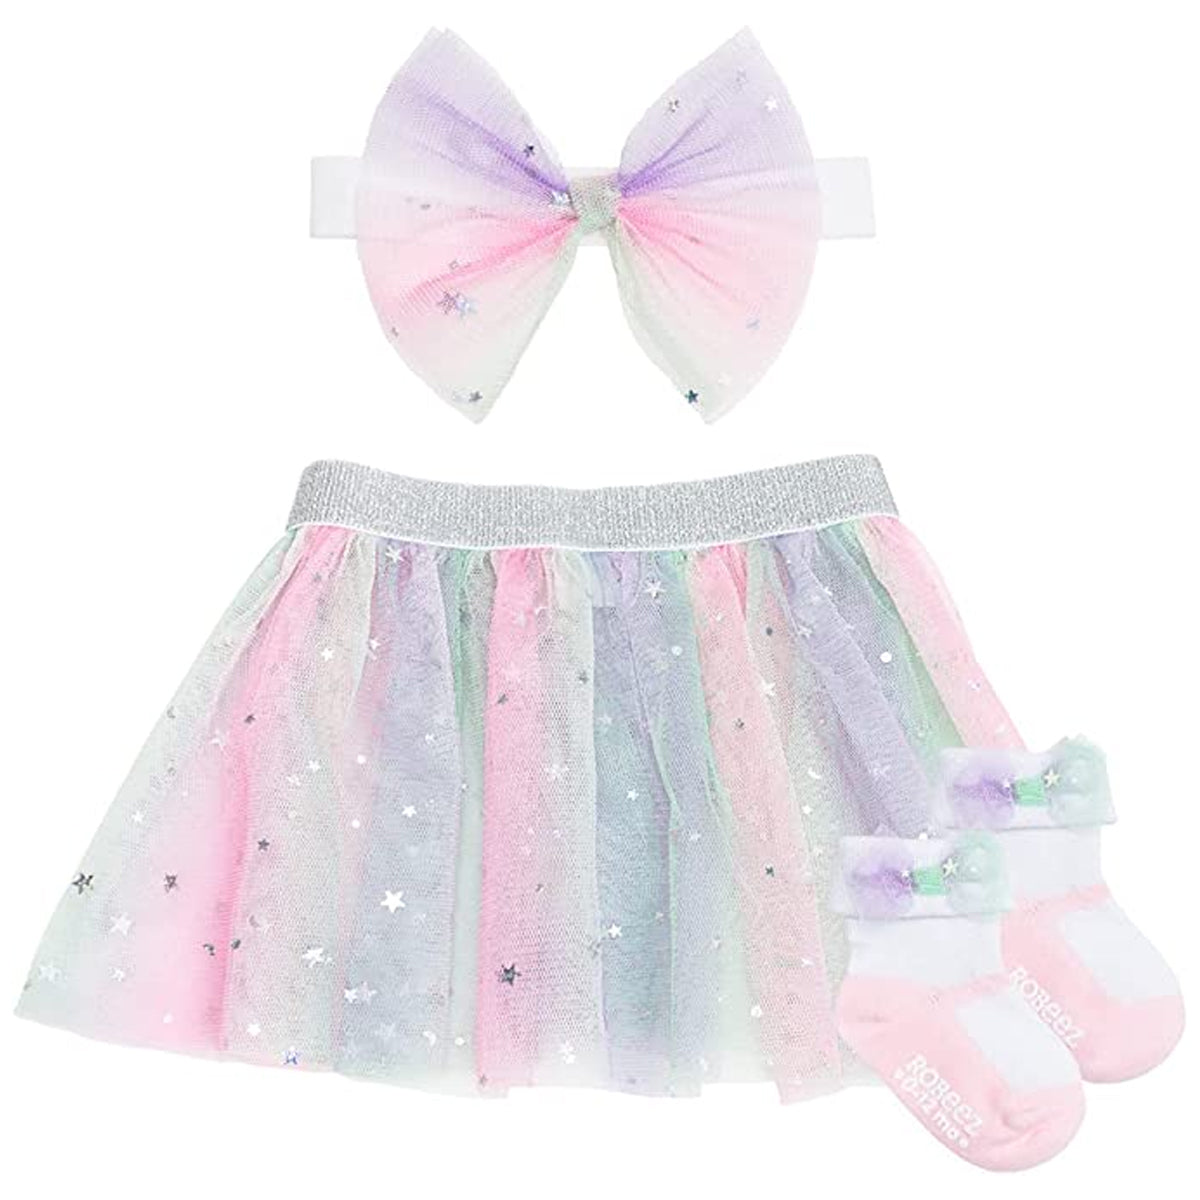 3pc Robeez Baby Girl Clothing Set – Headband, Socks, Skirt, 0-12M